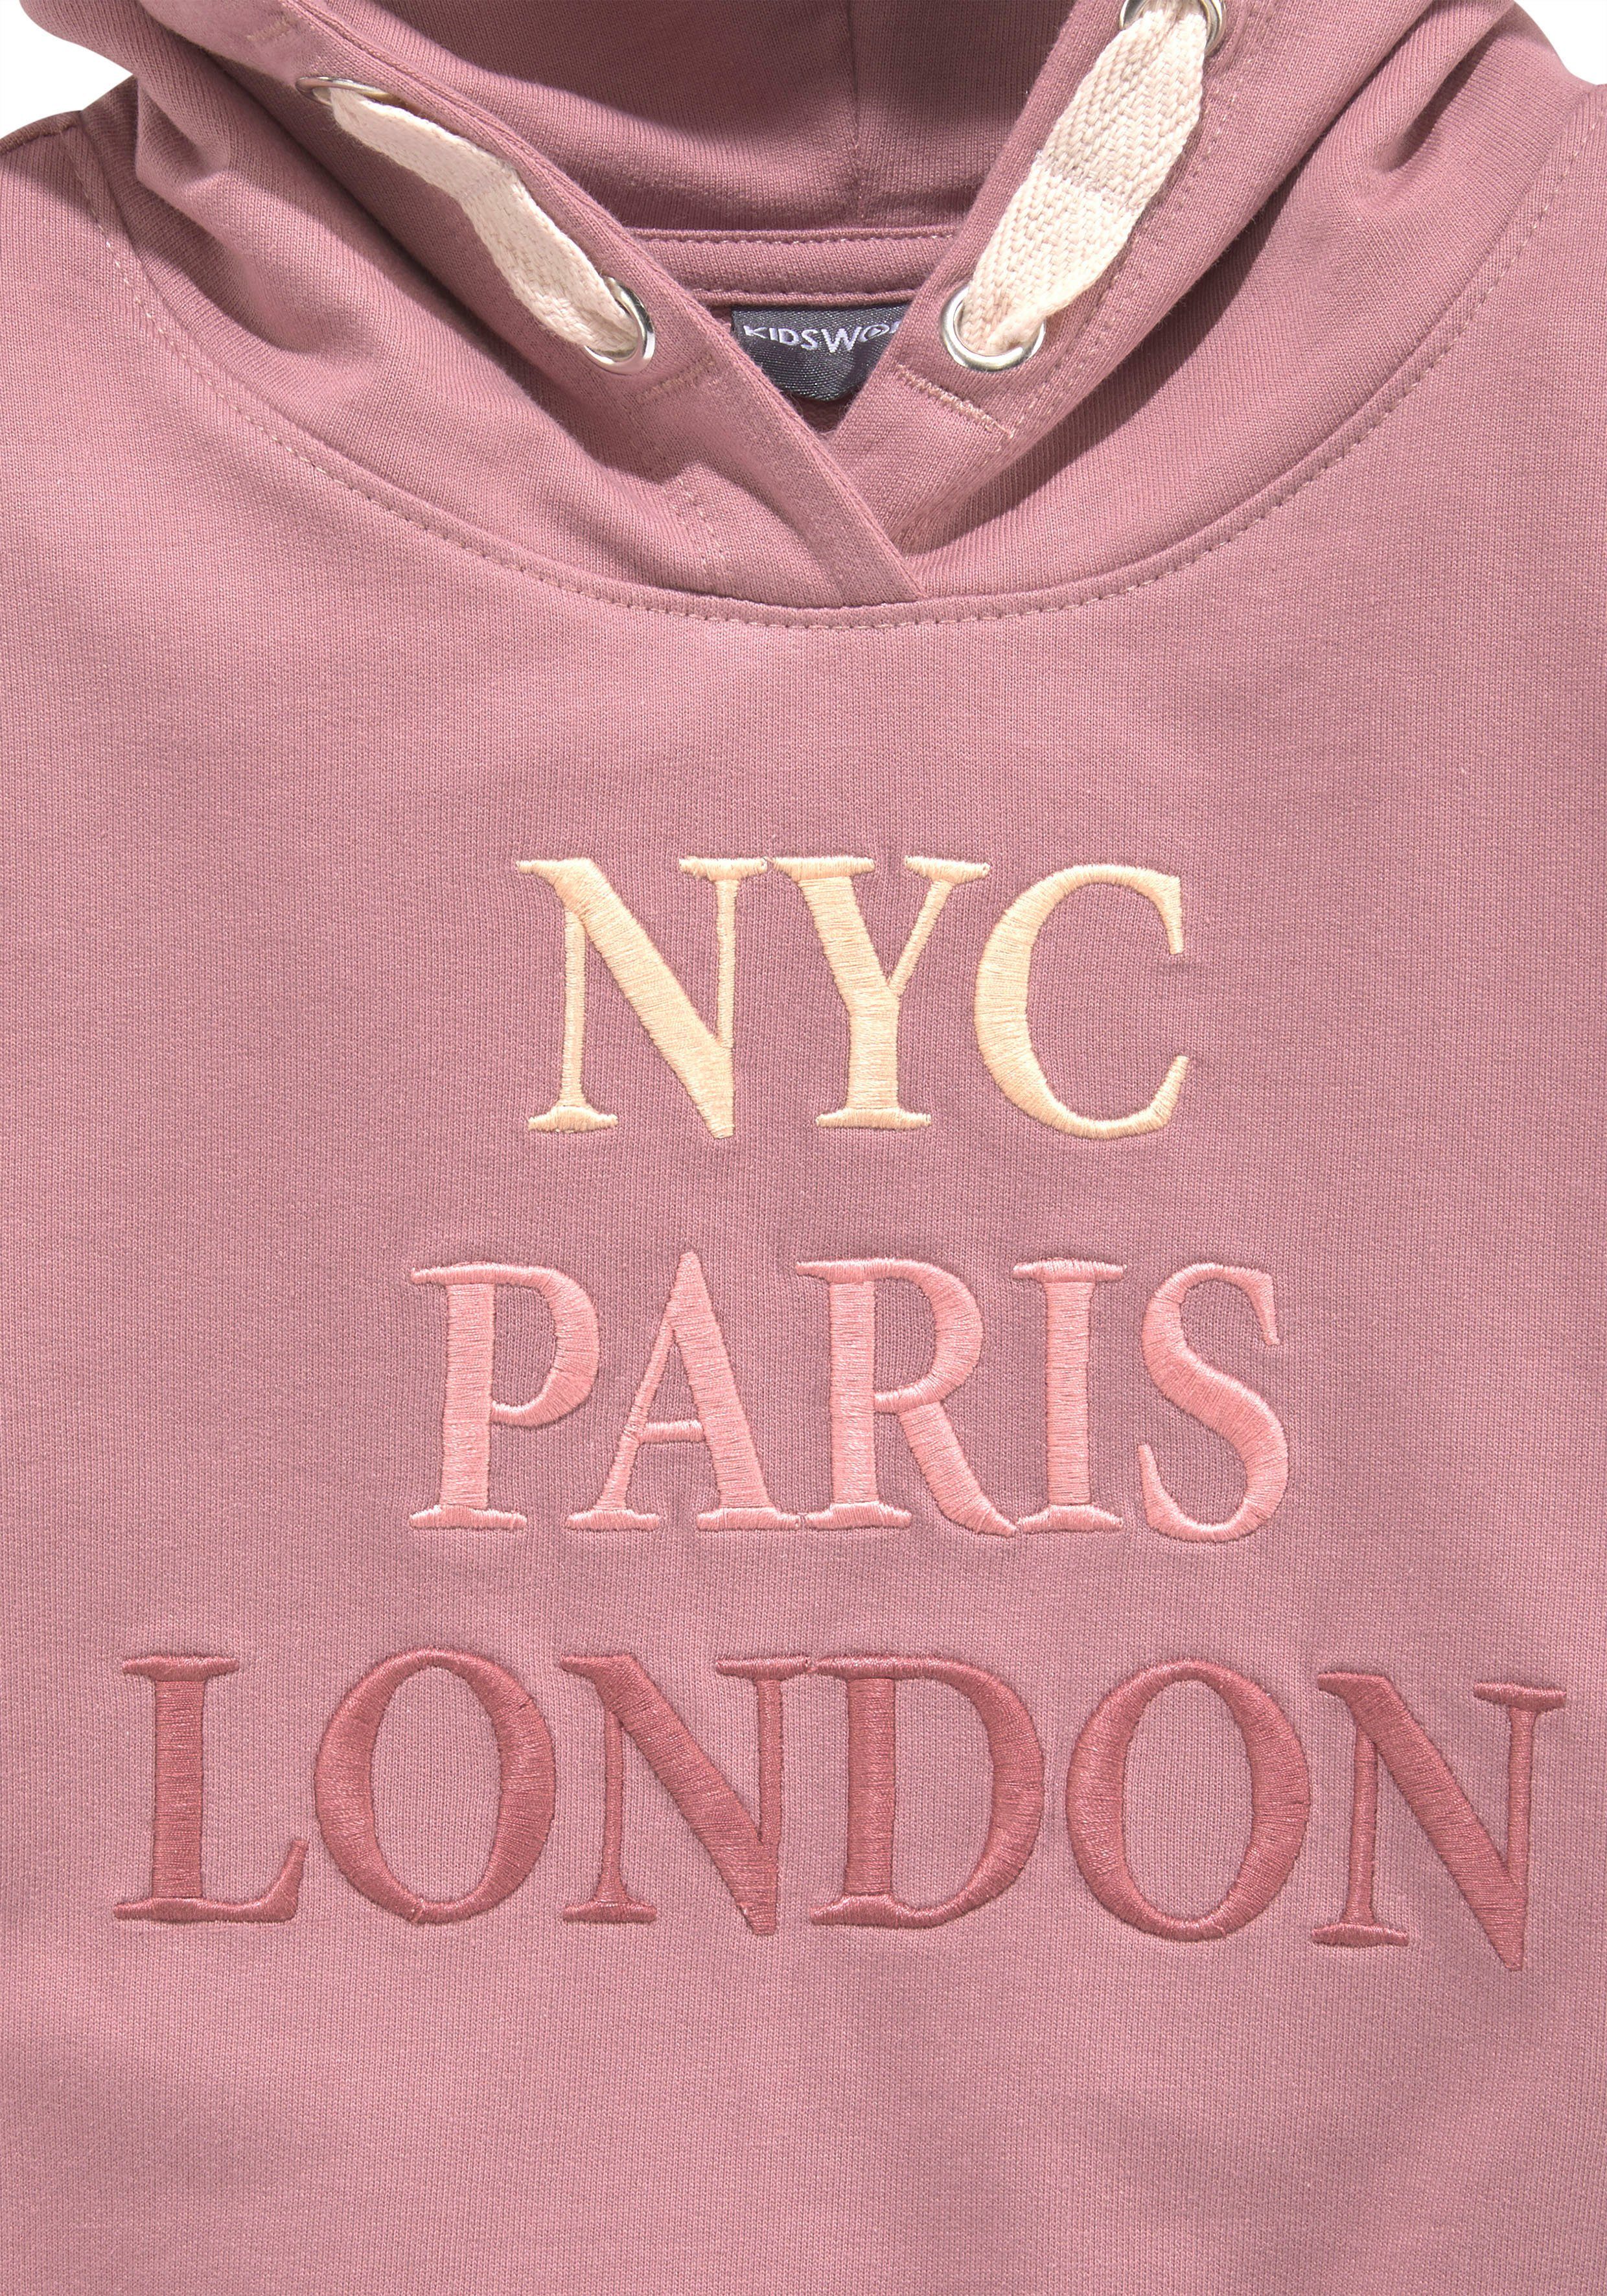 KIDSWORLD Kapuzensweatshirt Paris Stickerei mit NYC London